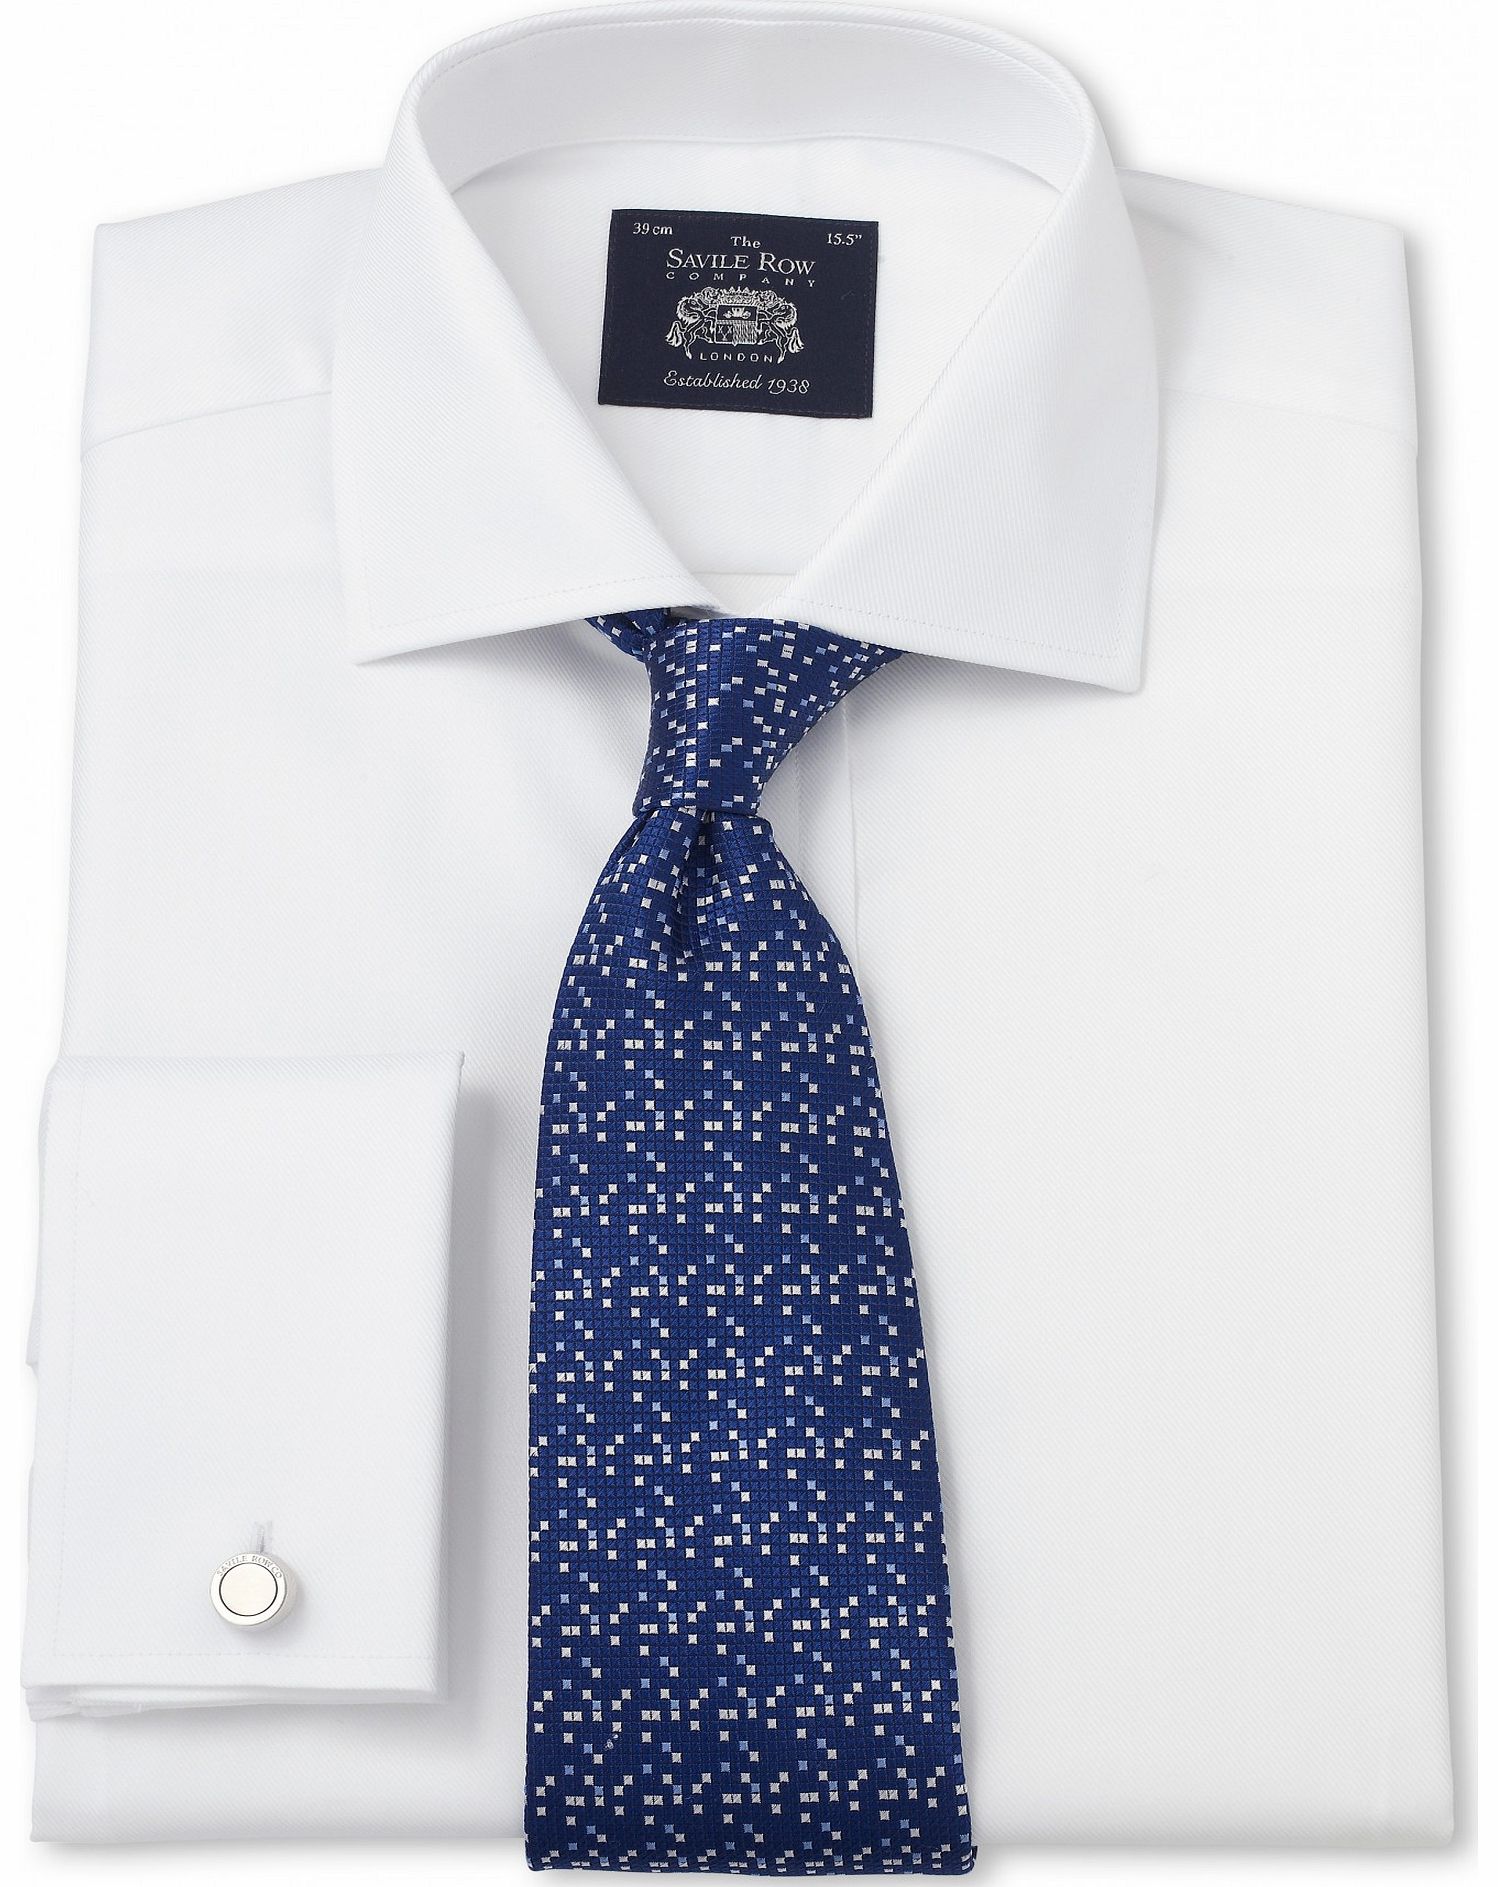 Savile Row Company White Twill Slim Fit Shirt 16`` Lengthened Double